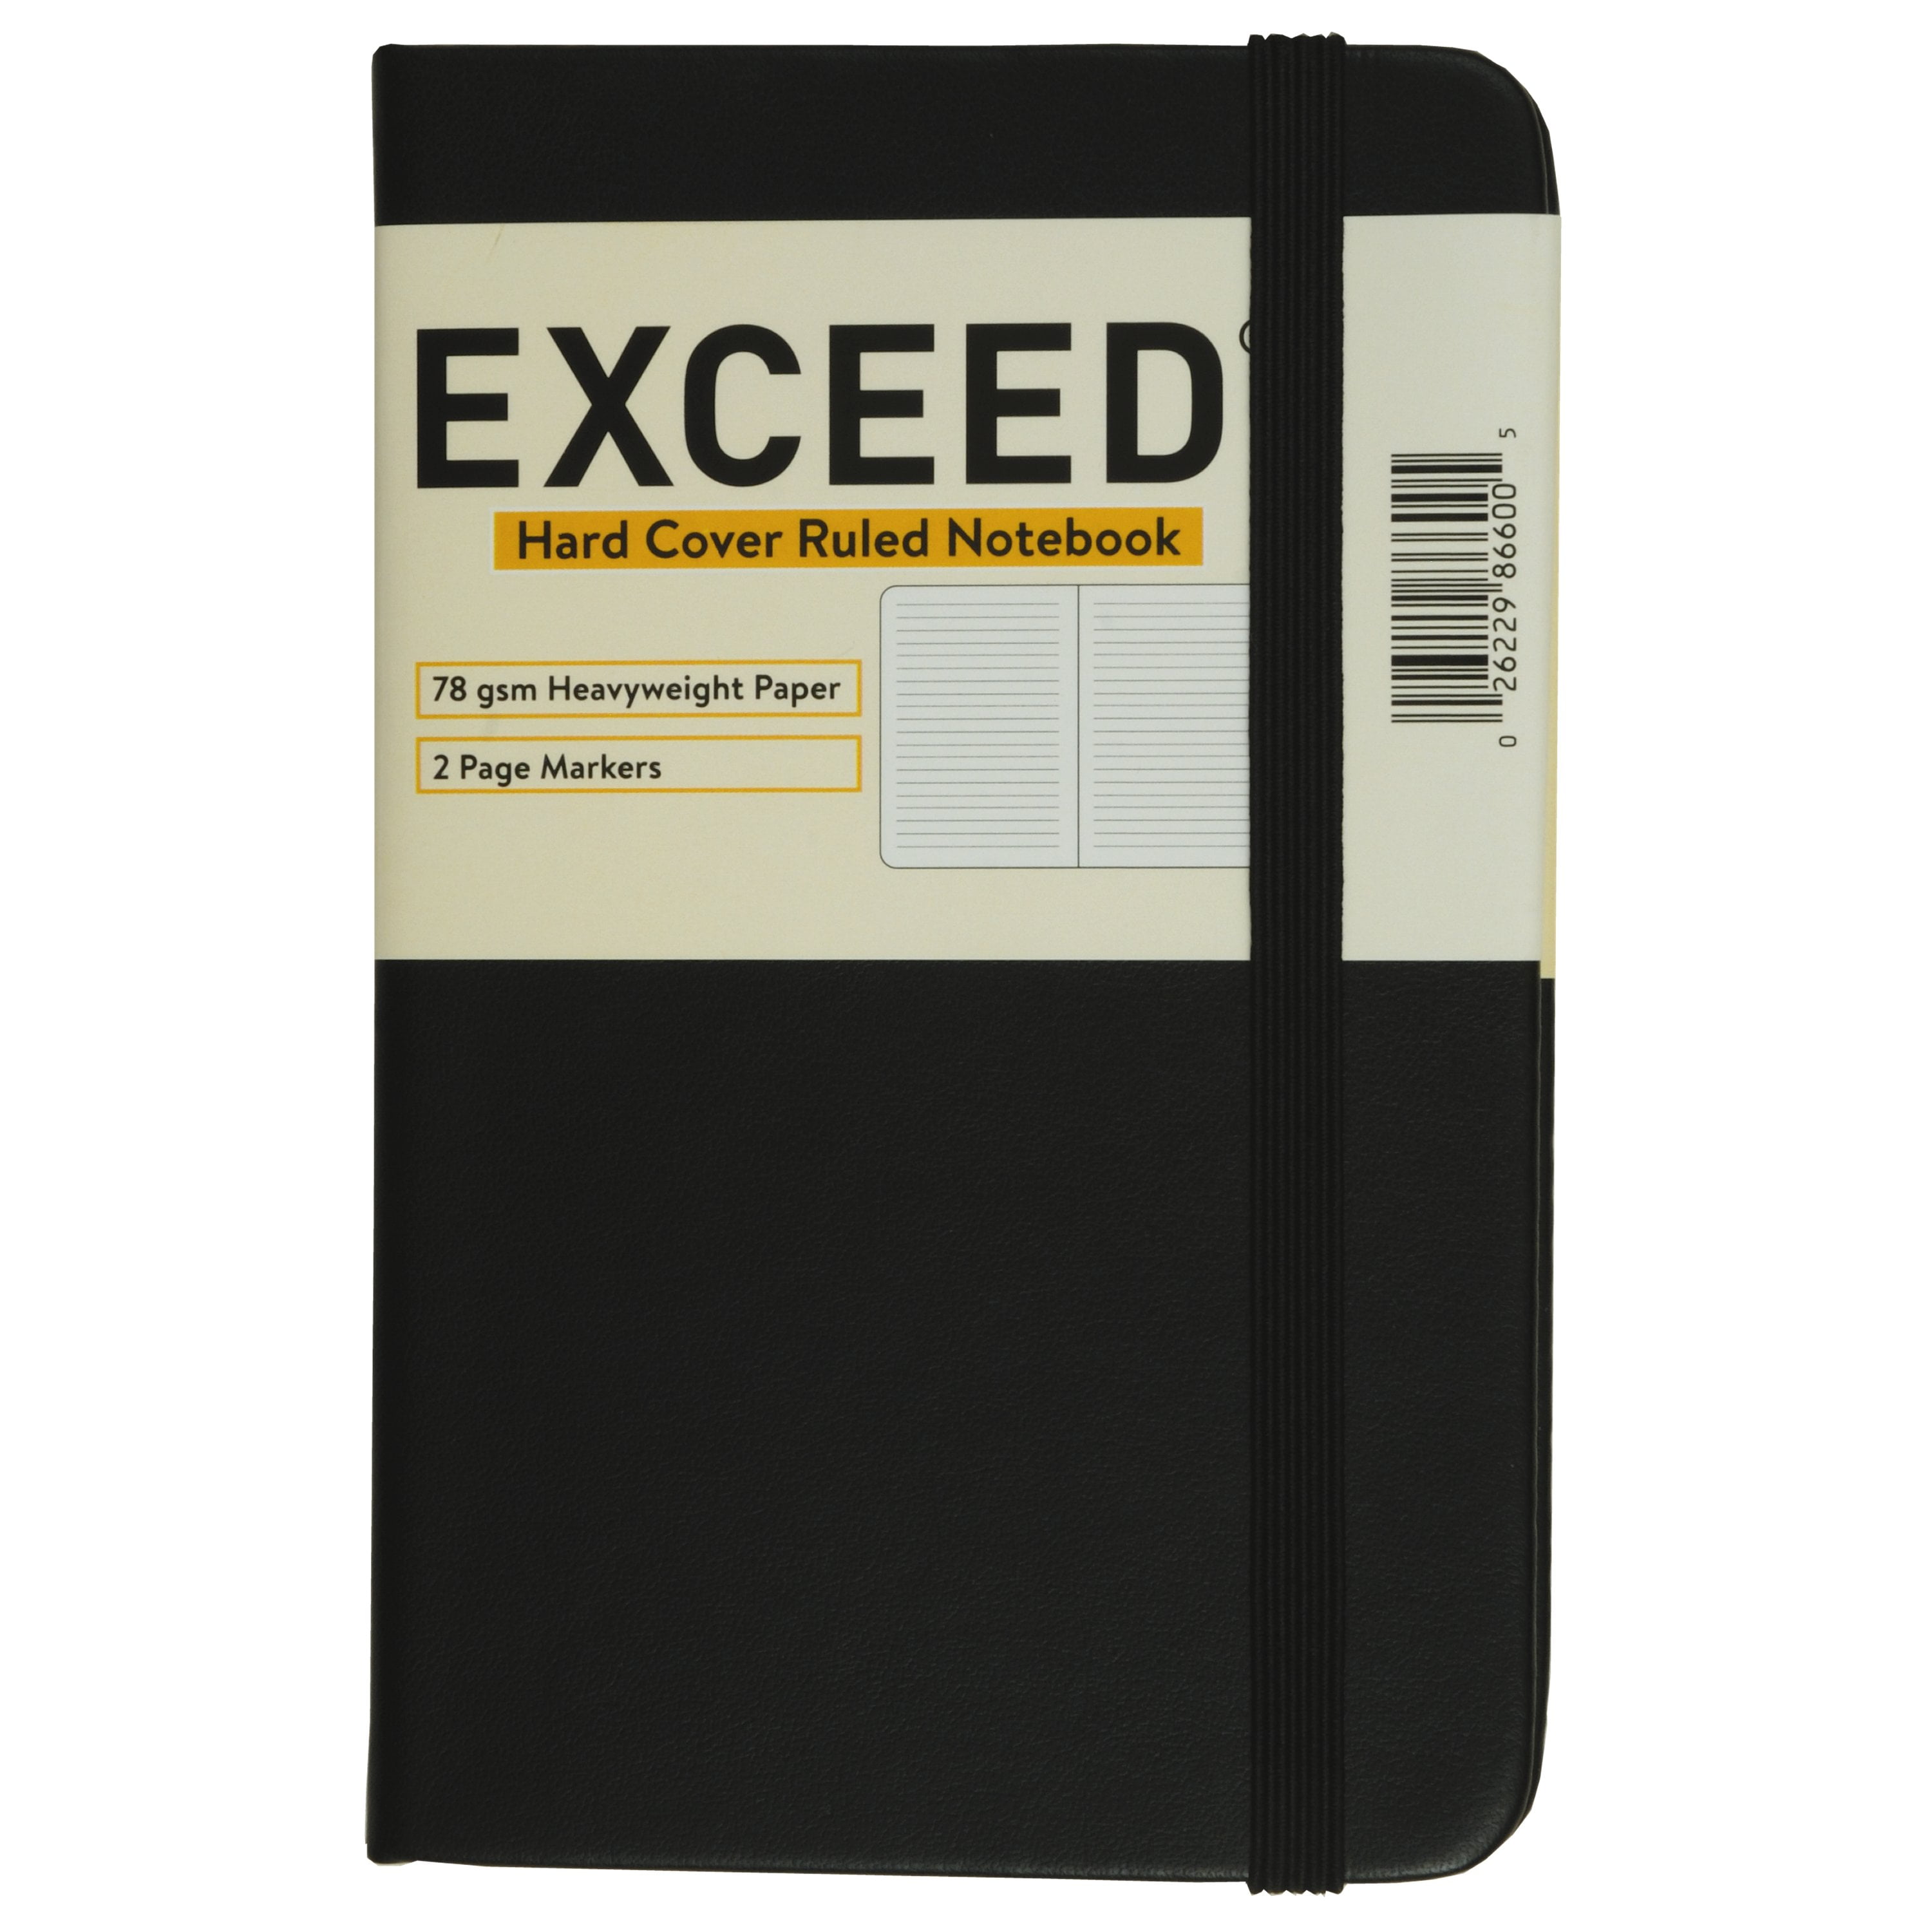 Exceed Pocket Ruled Journal, Black, 96 Sheets, 78 GSM